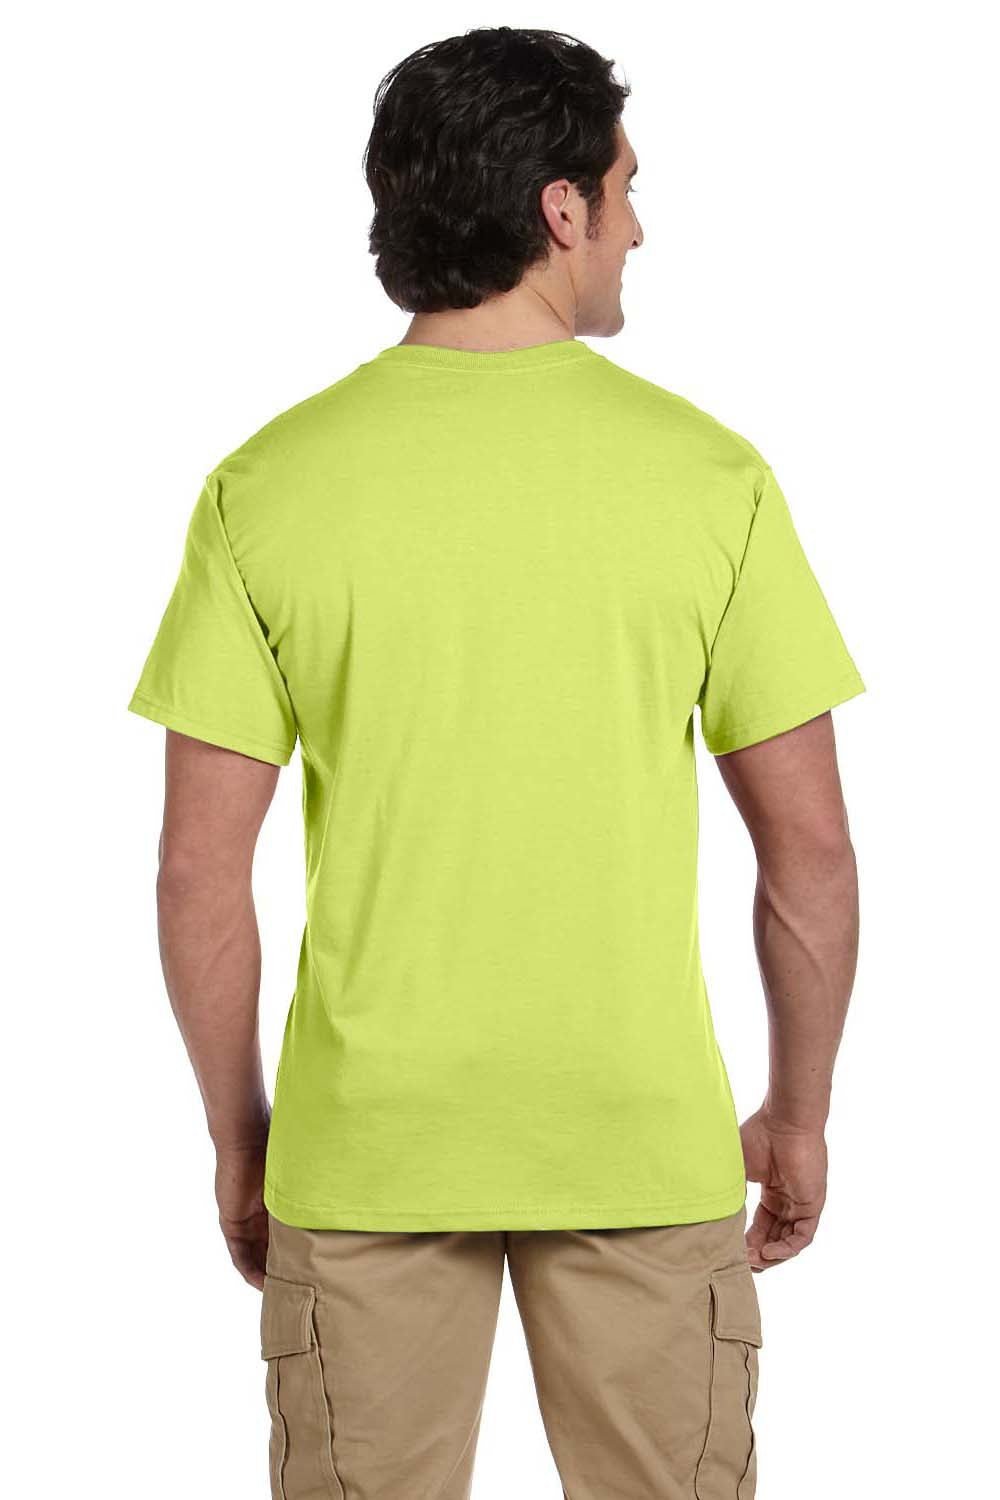 Jerzees 29P Mens Dri-Power Moisture Wicking Short Sleeve Crewneck T-Shirt w/ Pocket Safety Green Back